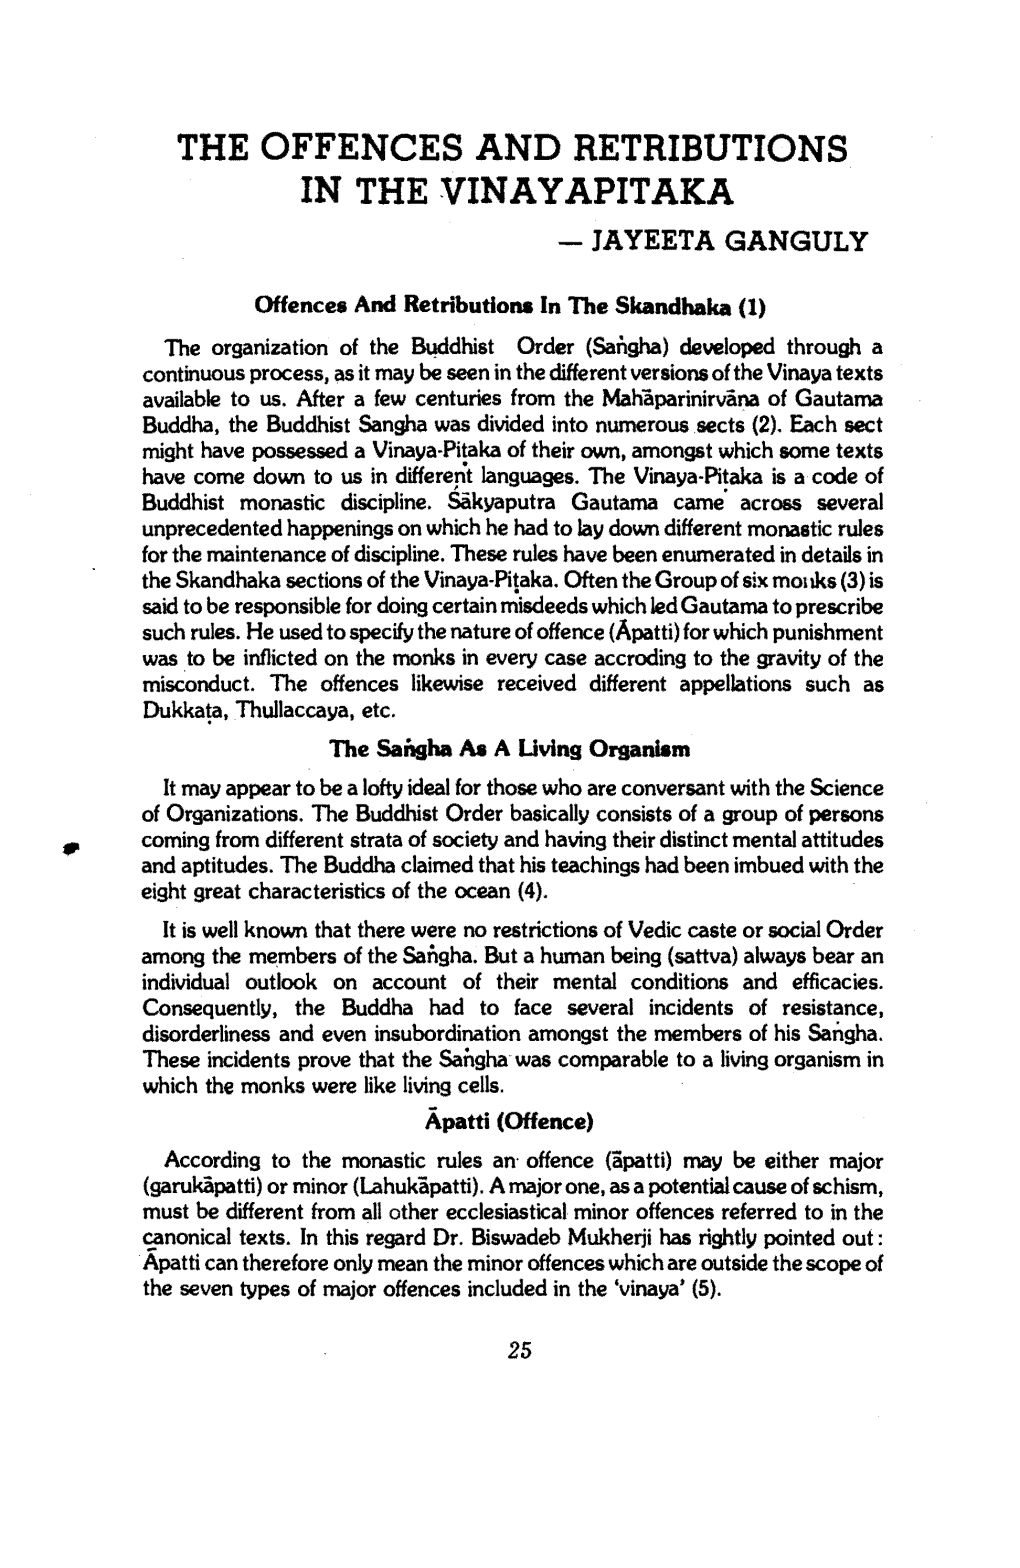 The Offences and Retributions in the Vinayapitaka - Jayeeta Ganguly